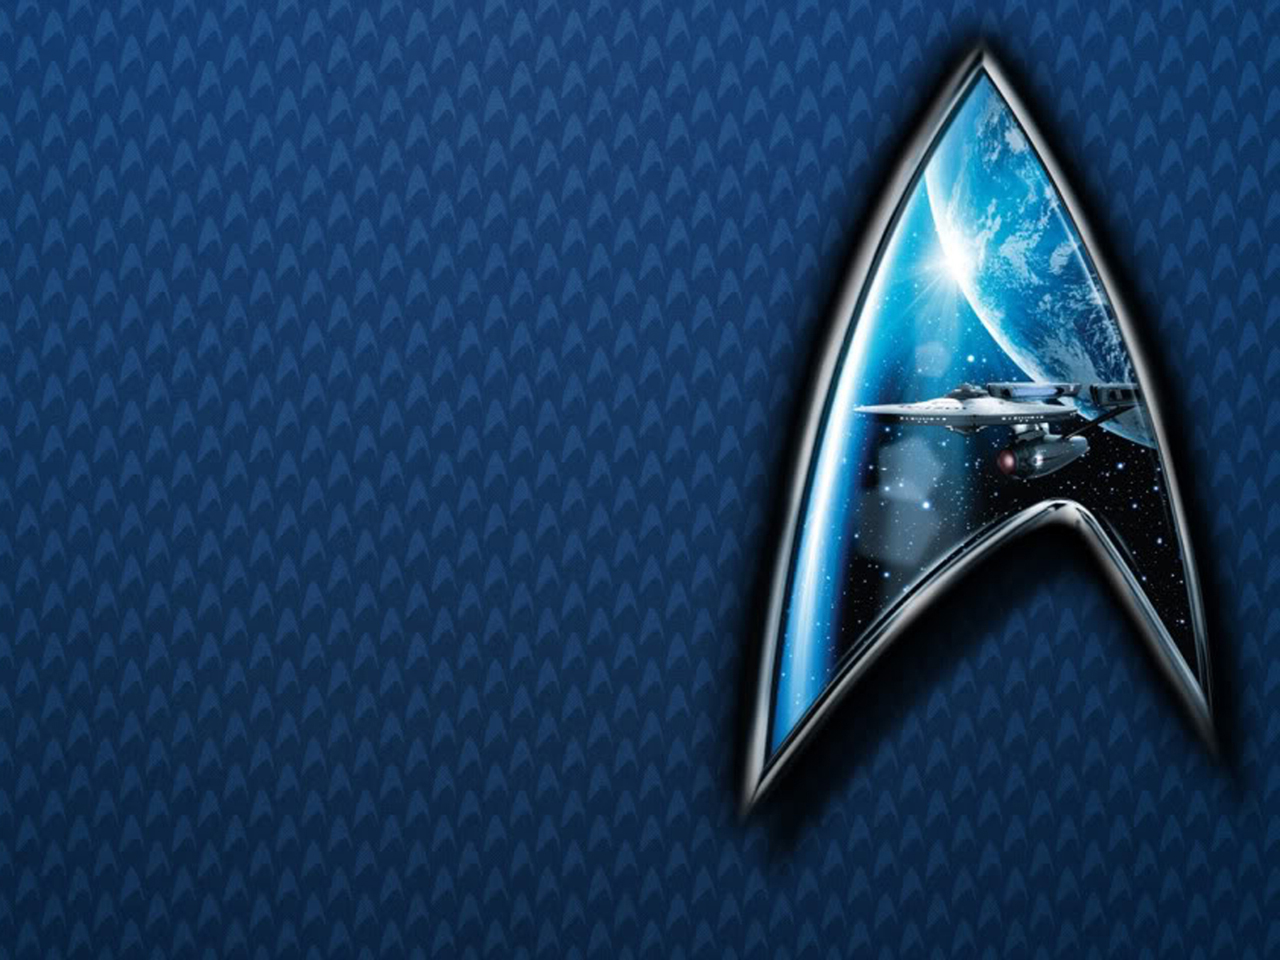 - Star Trek USS Enterprise Insignia - free Star Trek computer desktop wallpaper, pictures, images.